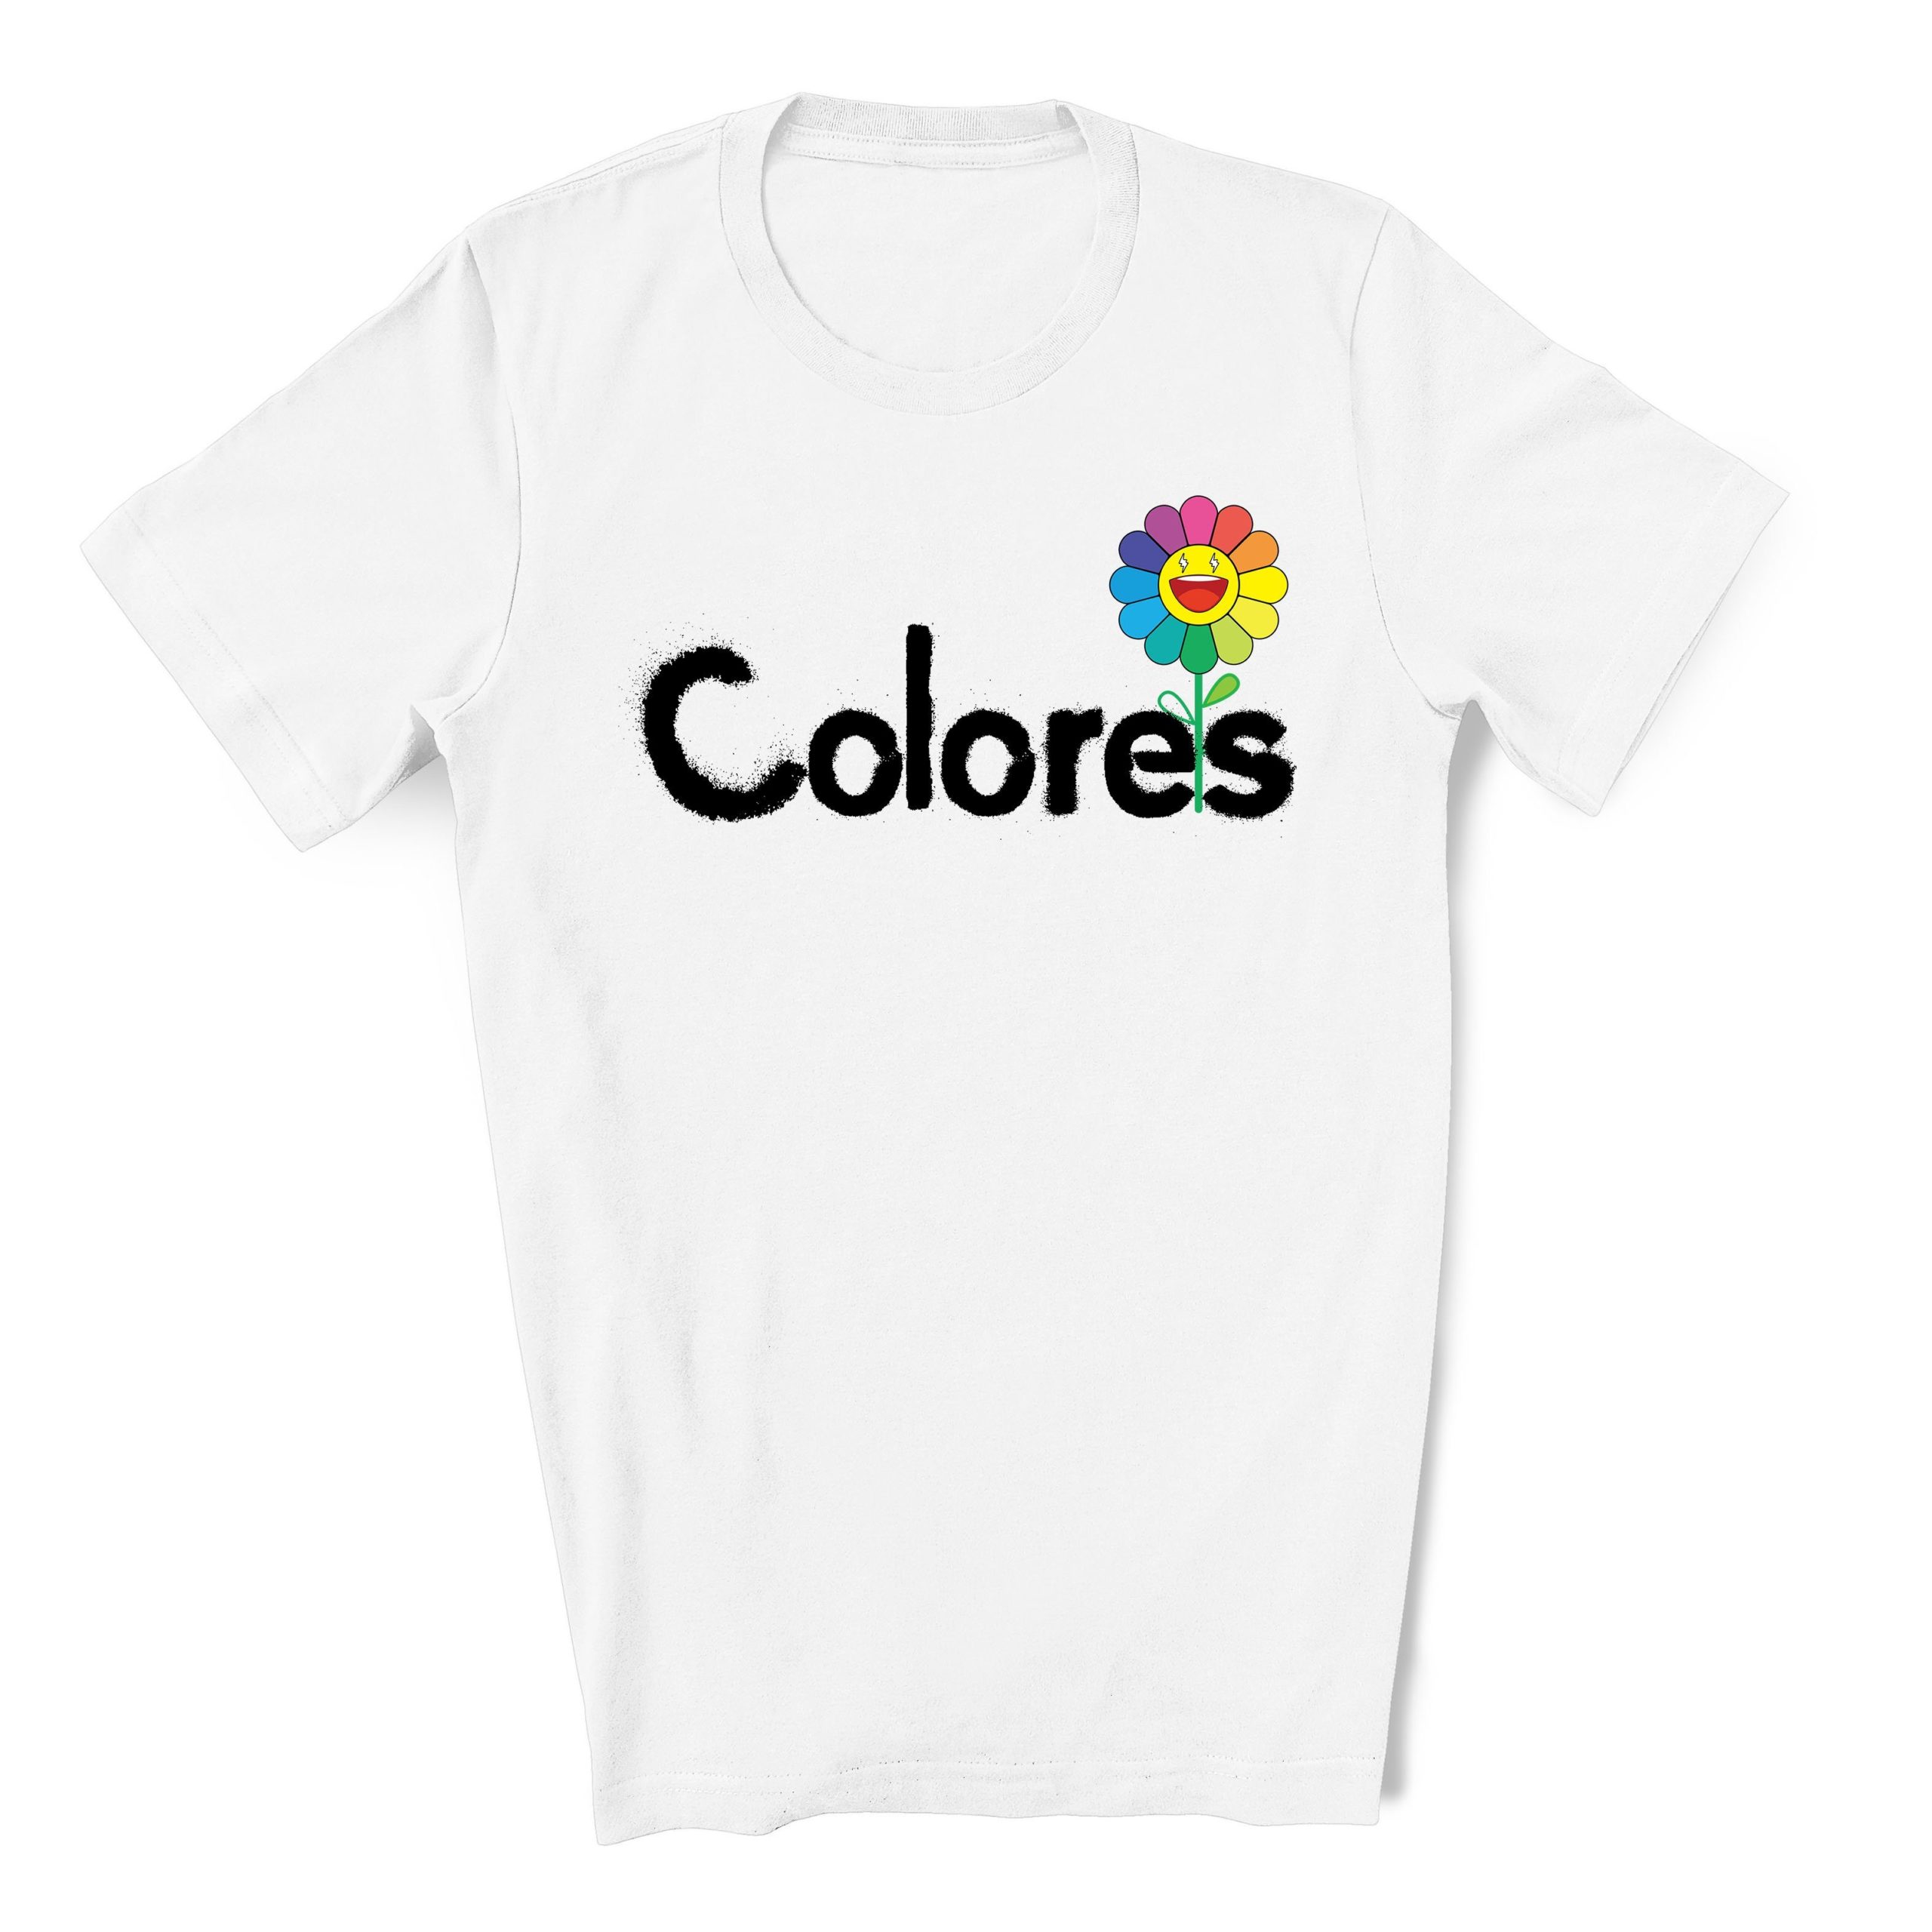 Colores J Balvin Shirt  Fashion outfits, Fashion, Shirts